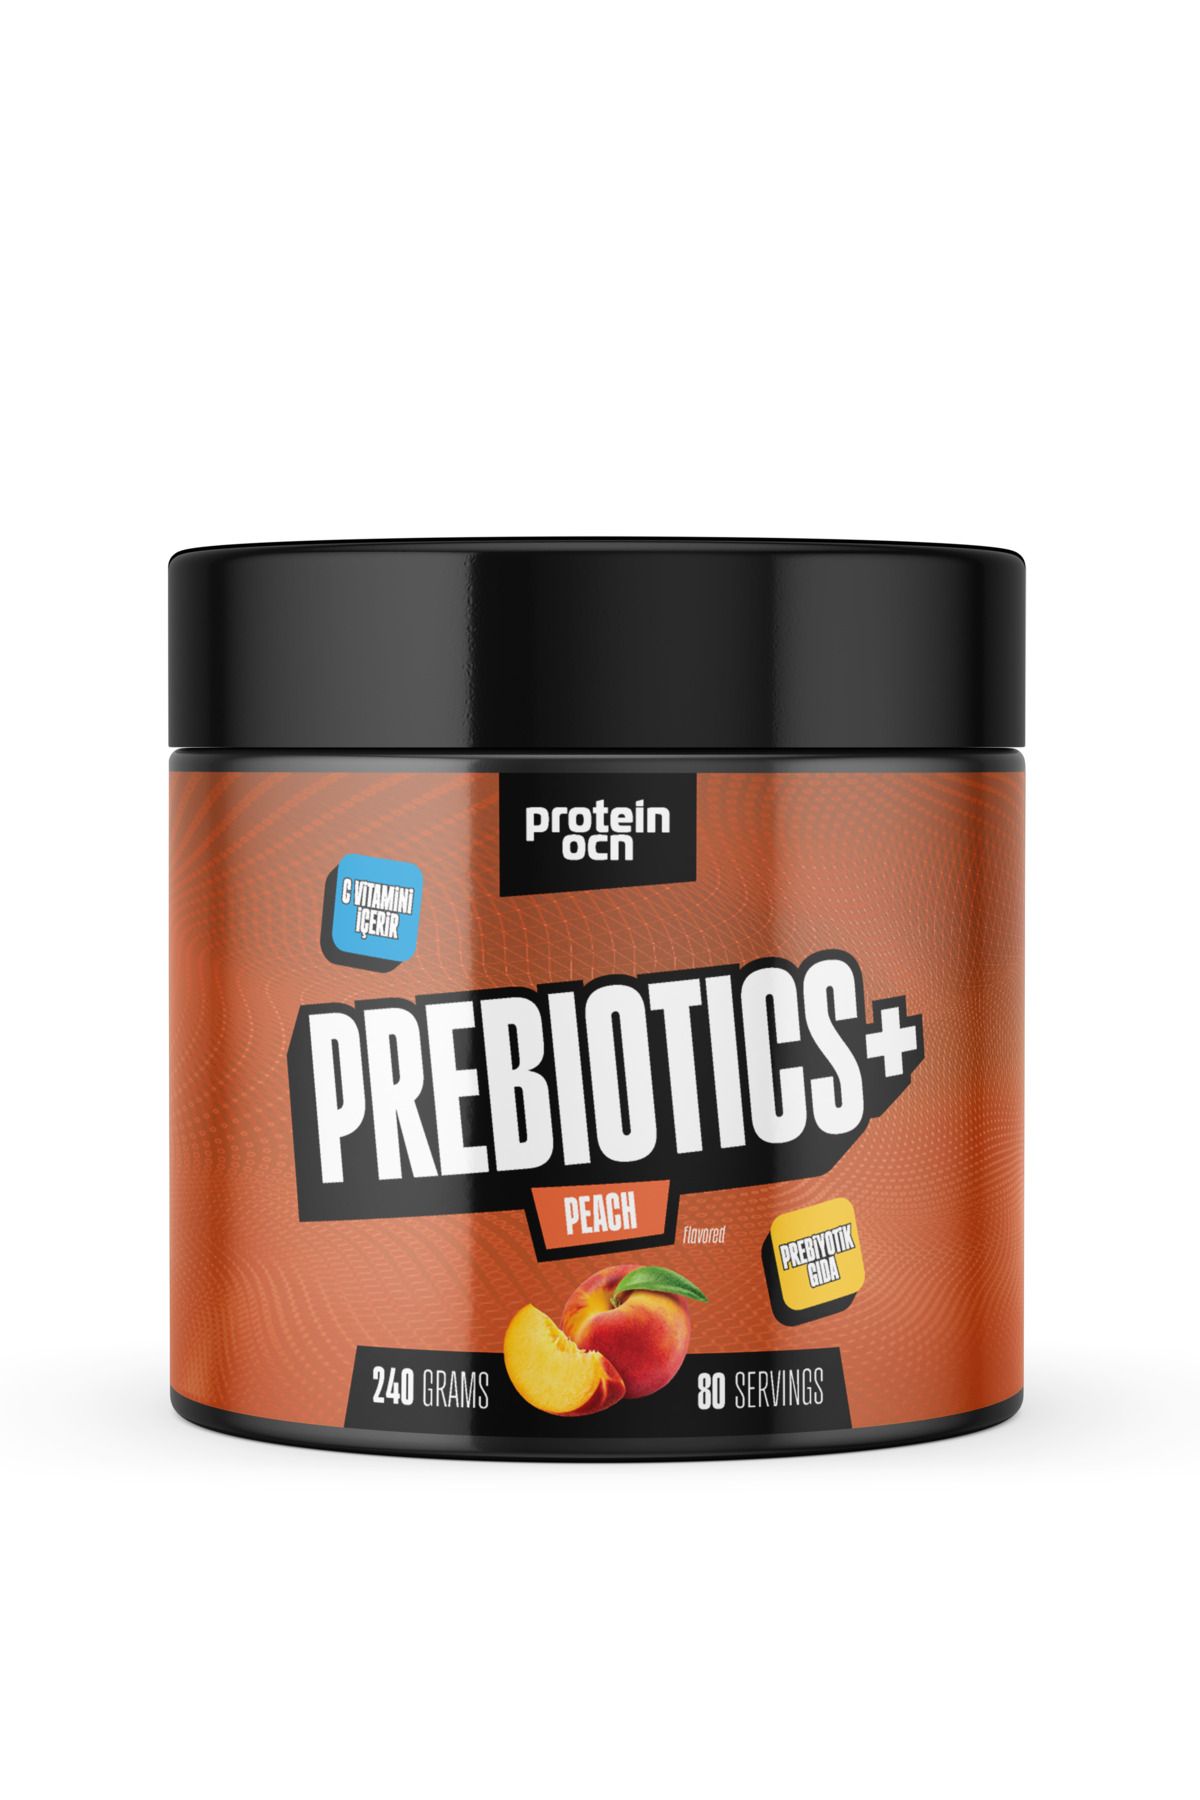 Proteinocean Prebiotics+ - Şeftali 240g - 80 Servis